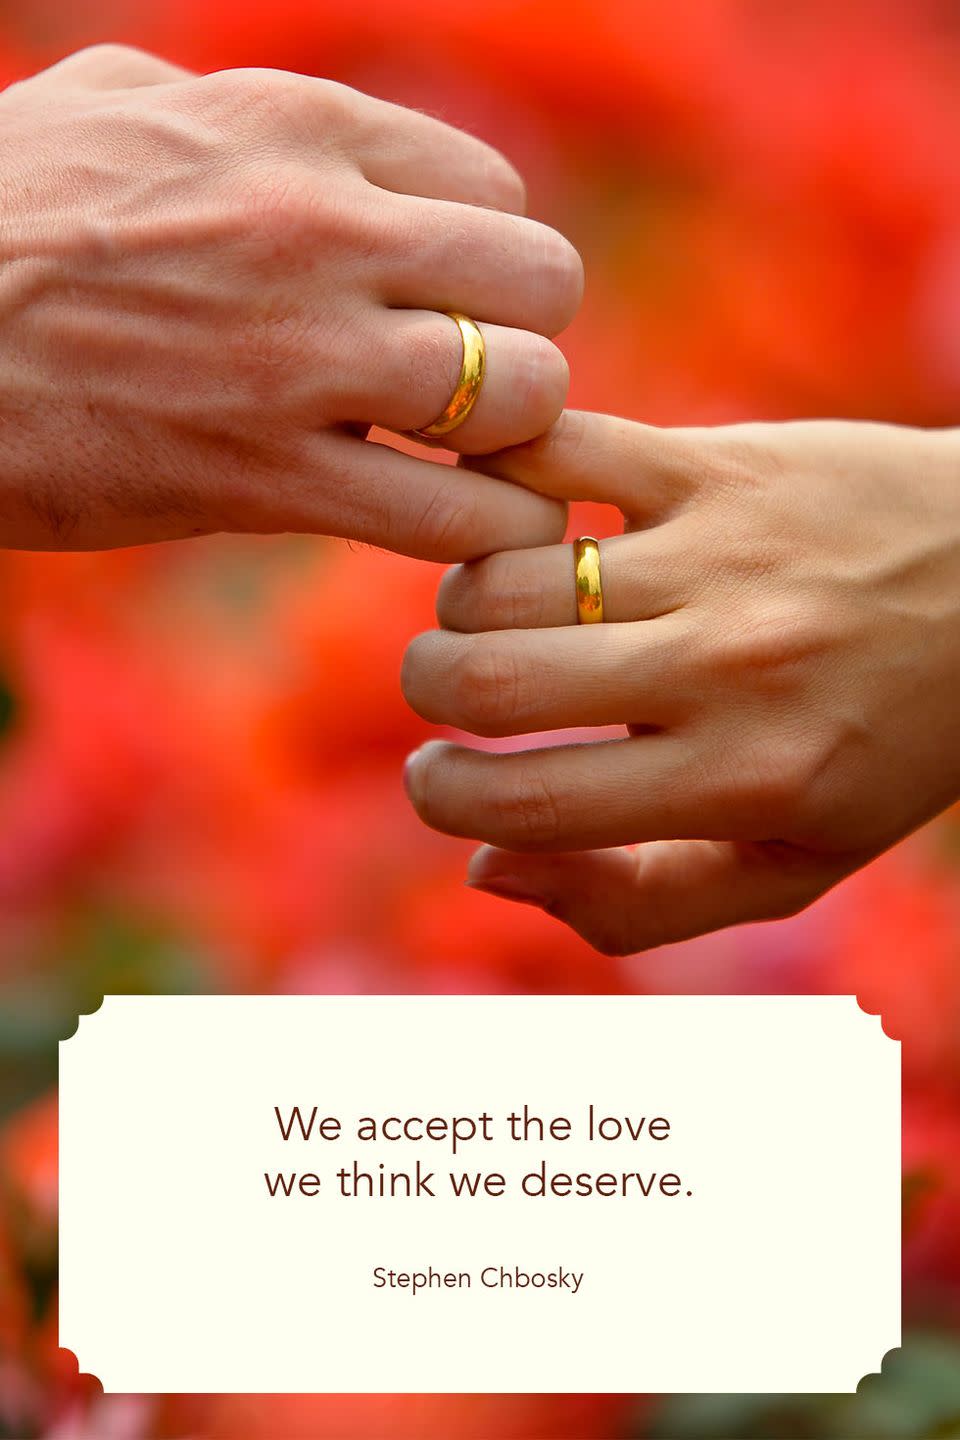 <p>"We accept the love we think we deserve."</p>